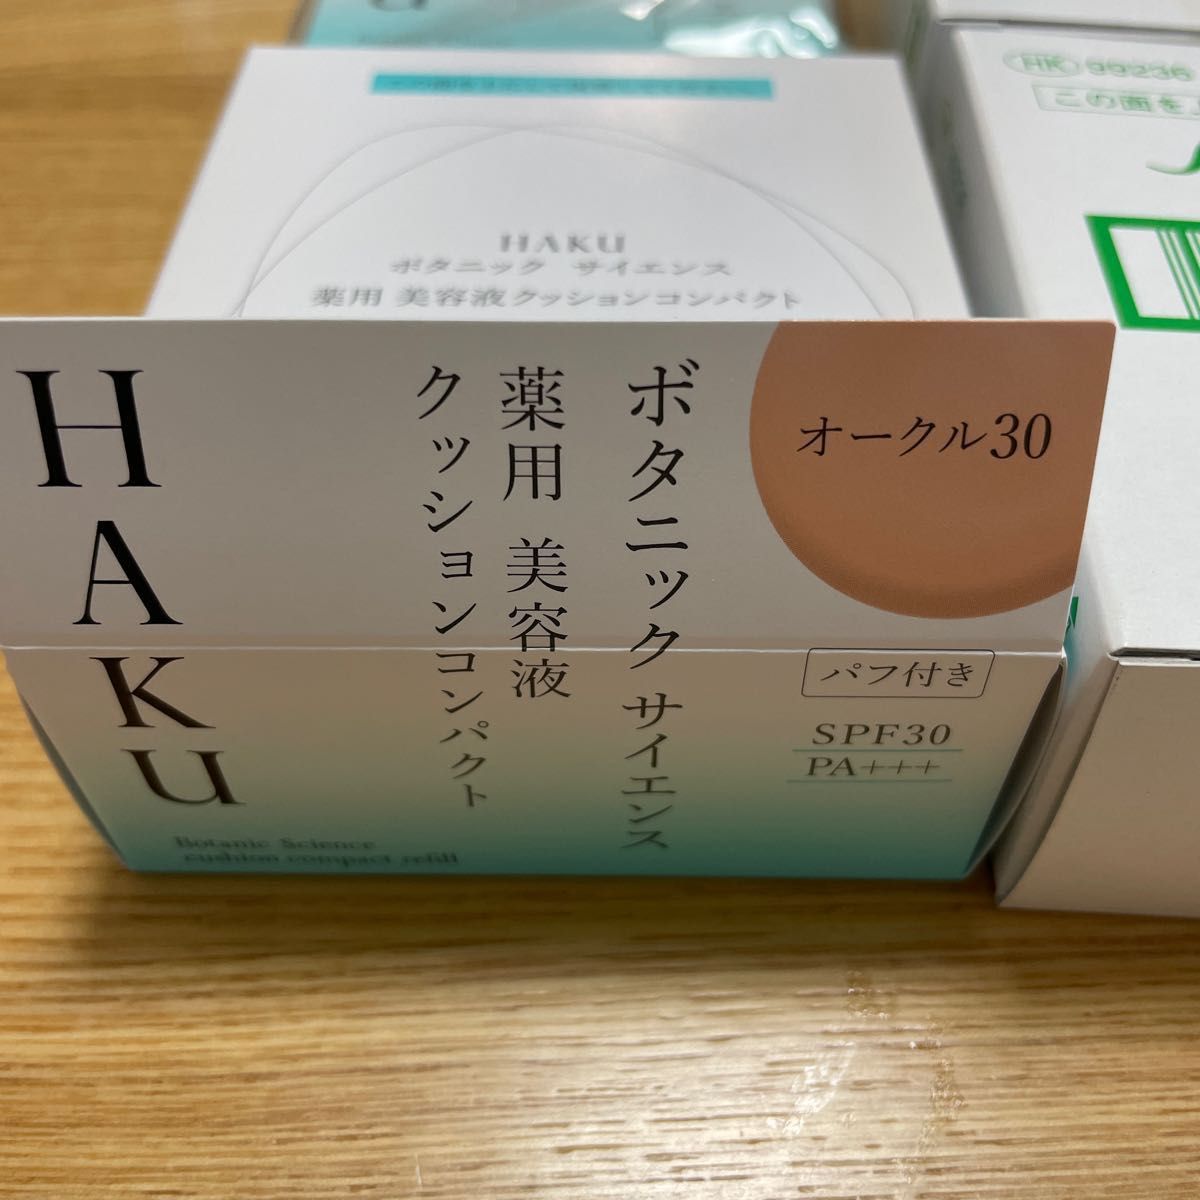 HAKU ボタニック サイエンス 薬用 美容液クッションコンパクト オークル30 レフィル